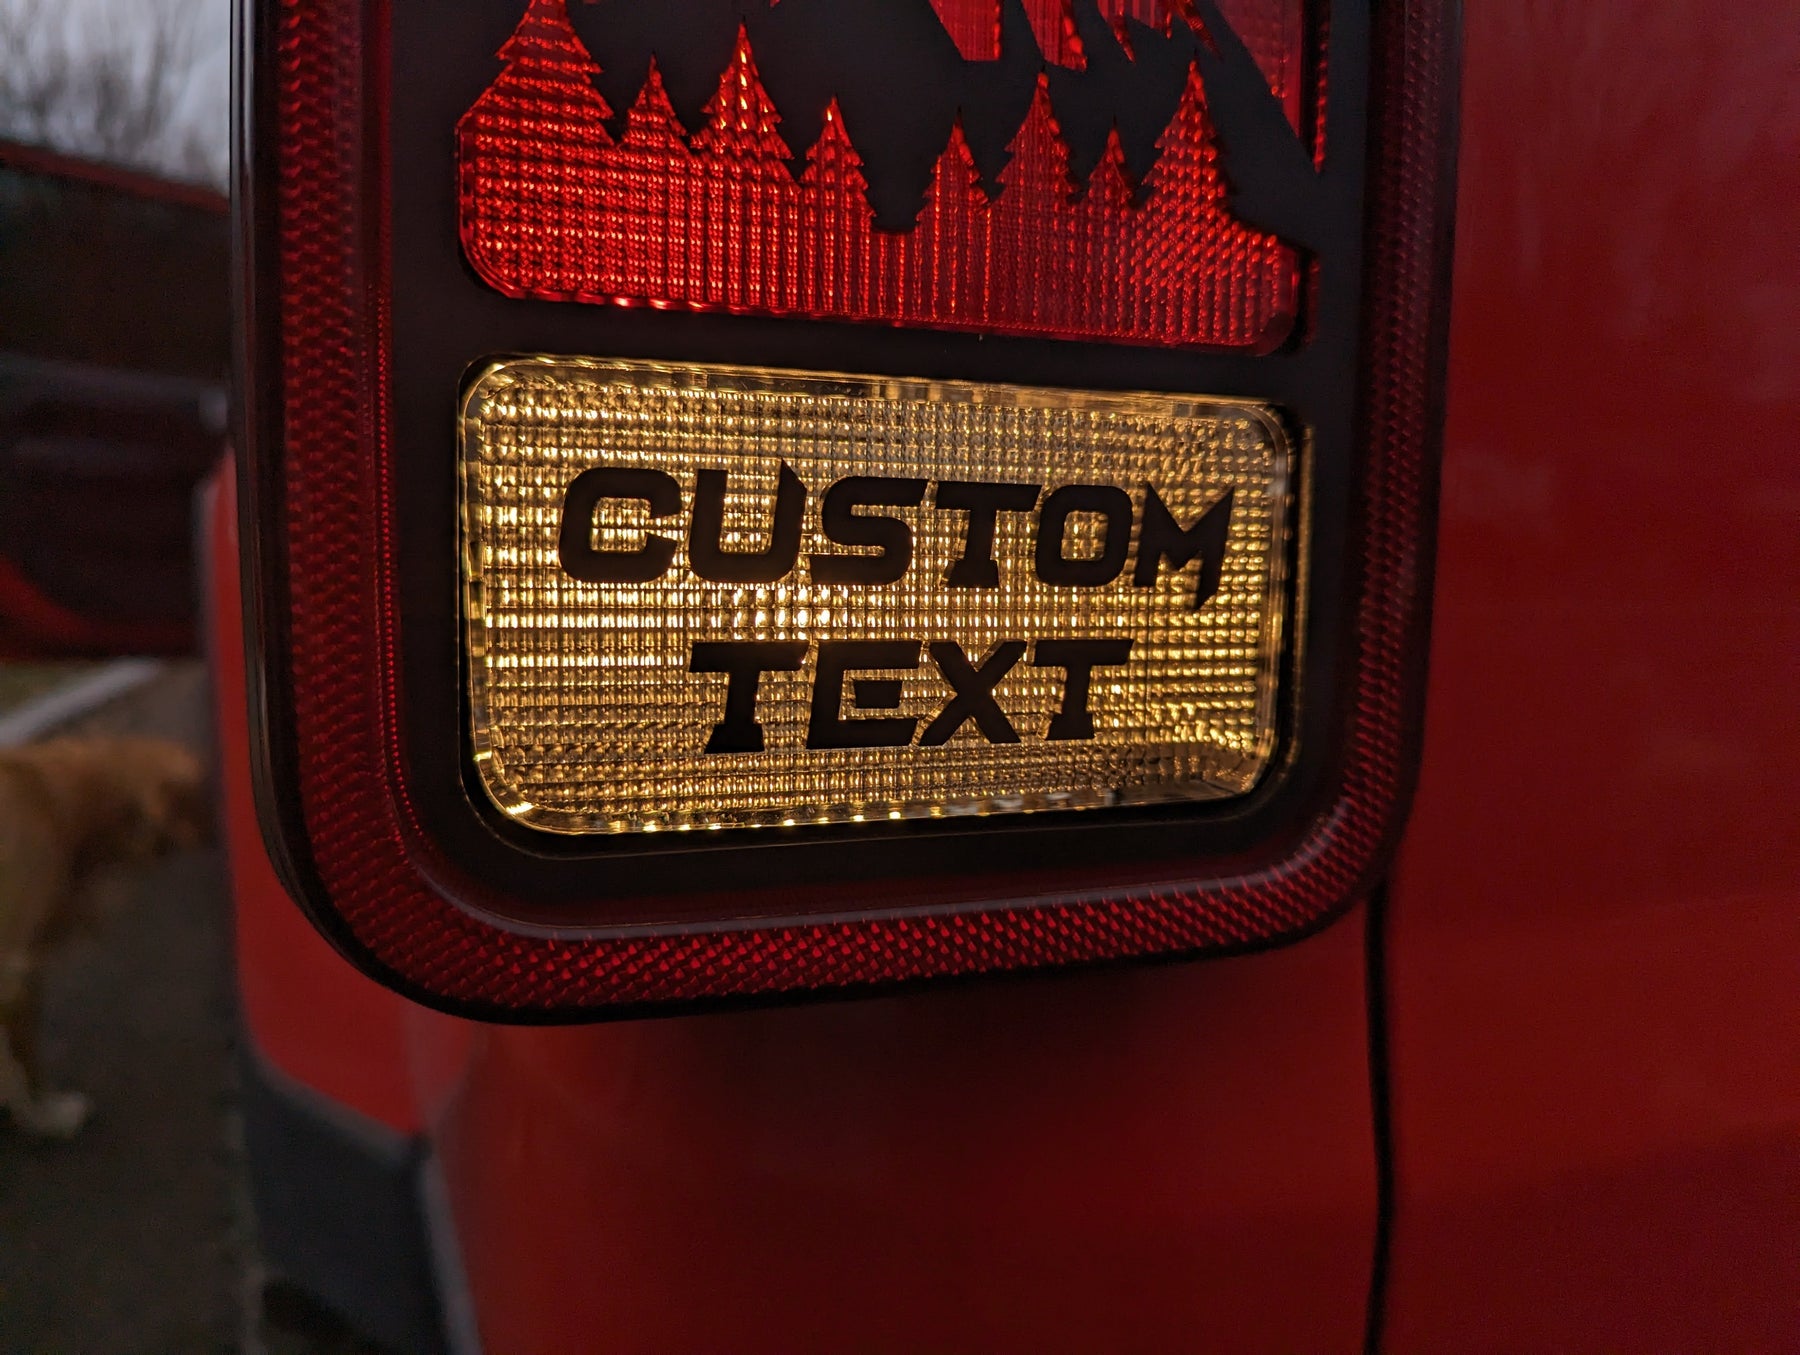 Custom Text Taillight Overlay - Pair - FITS 2020-2023 JEEP® GLADIATOR®